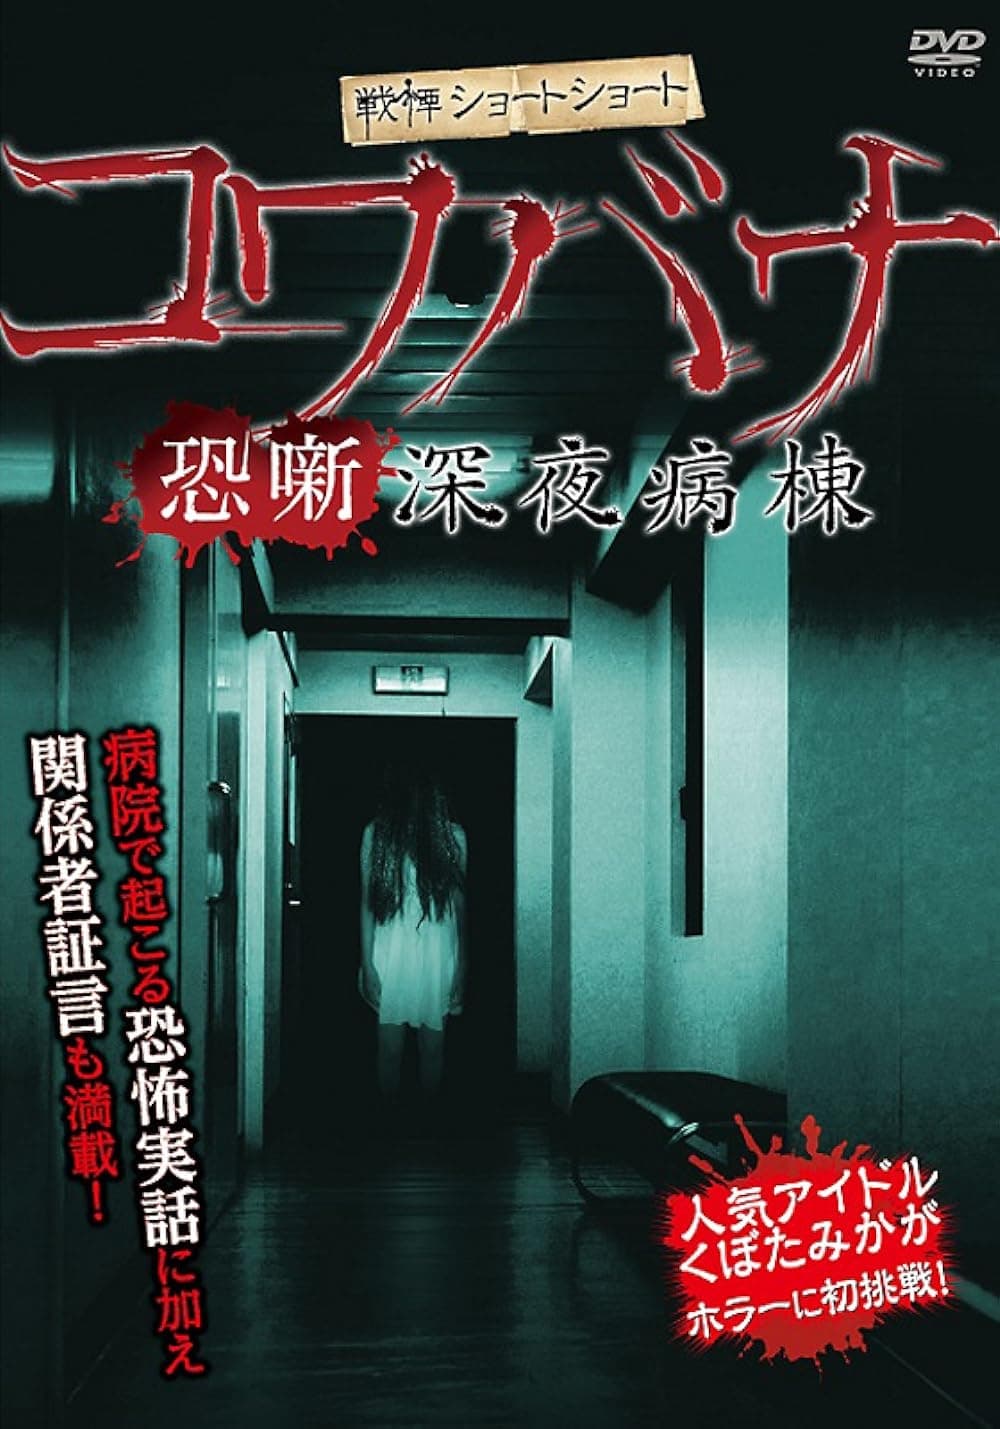 Spine-Chilling Short Stories Kowabana: Midnight Ward